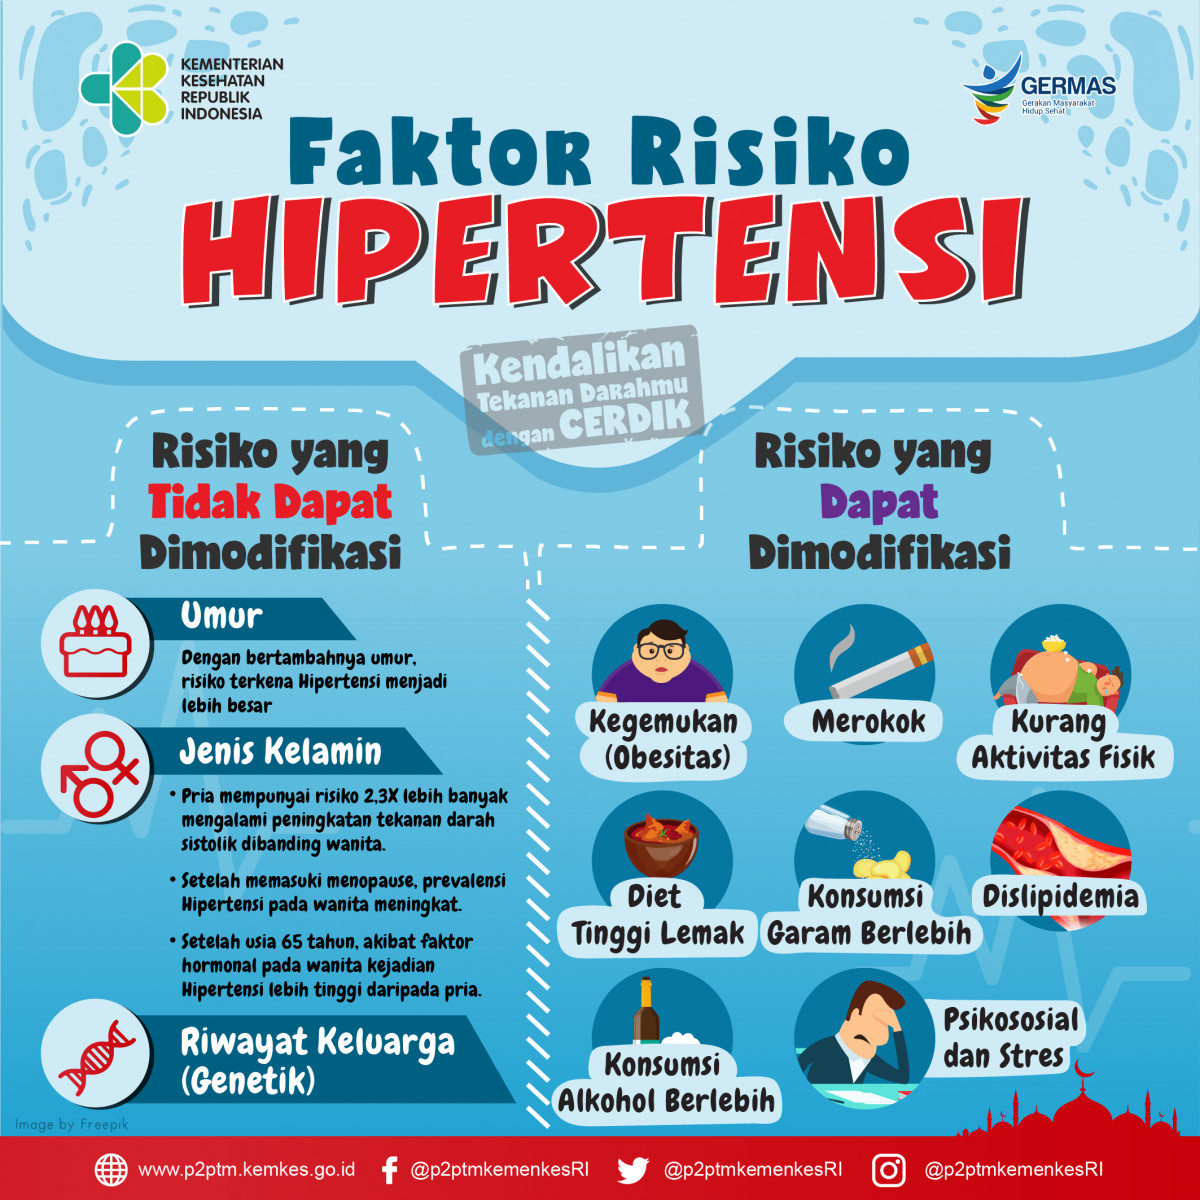 Faktor risiko penyebab Hipertensi